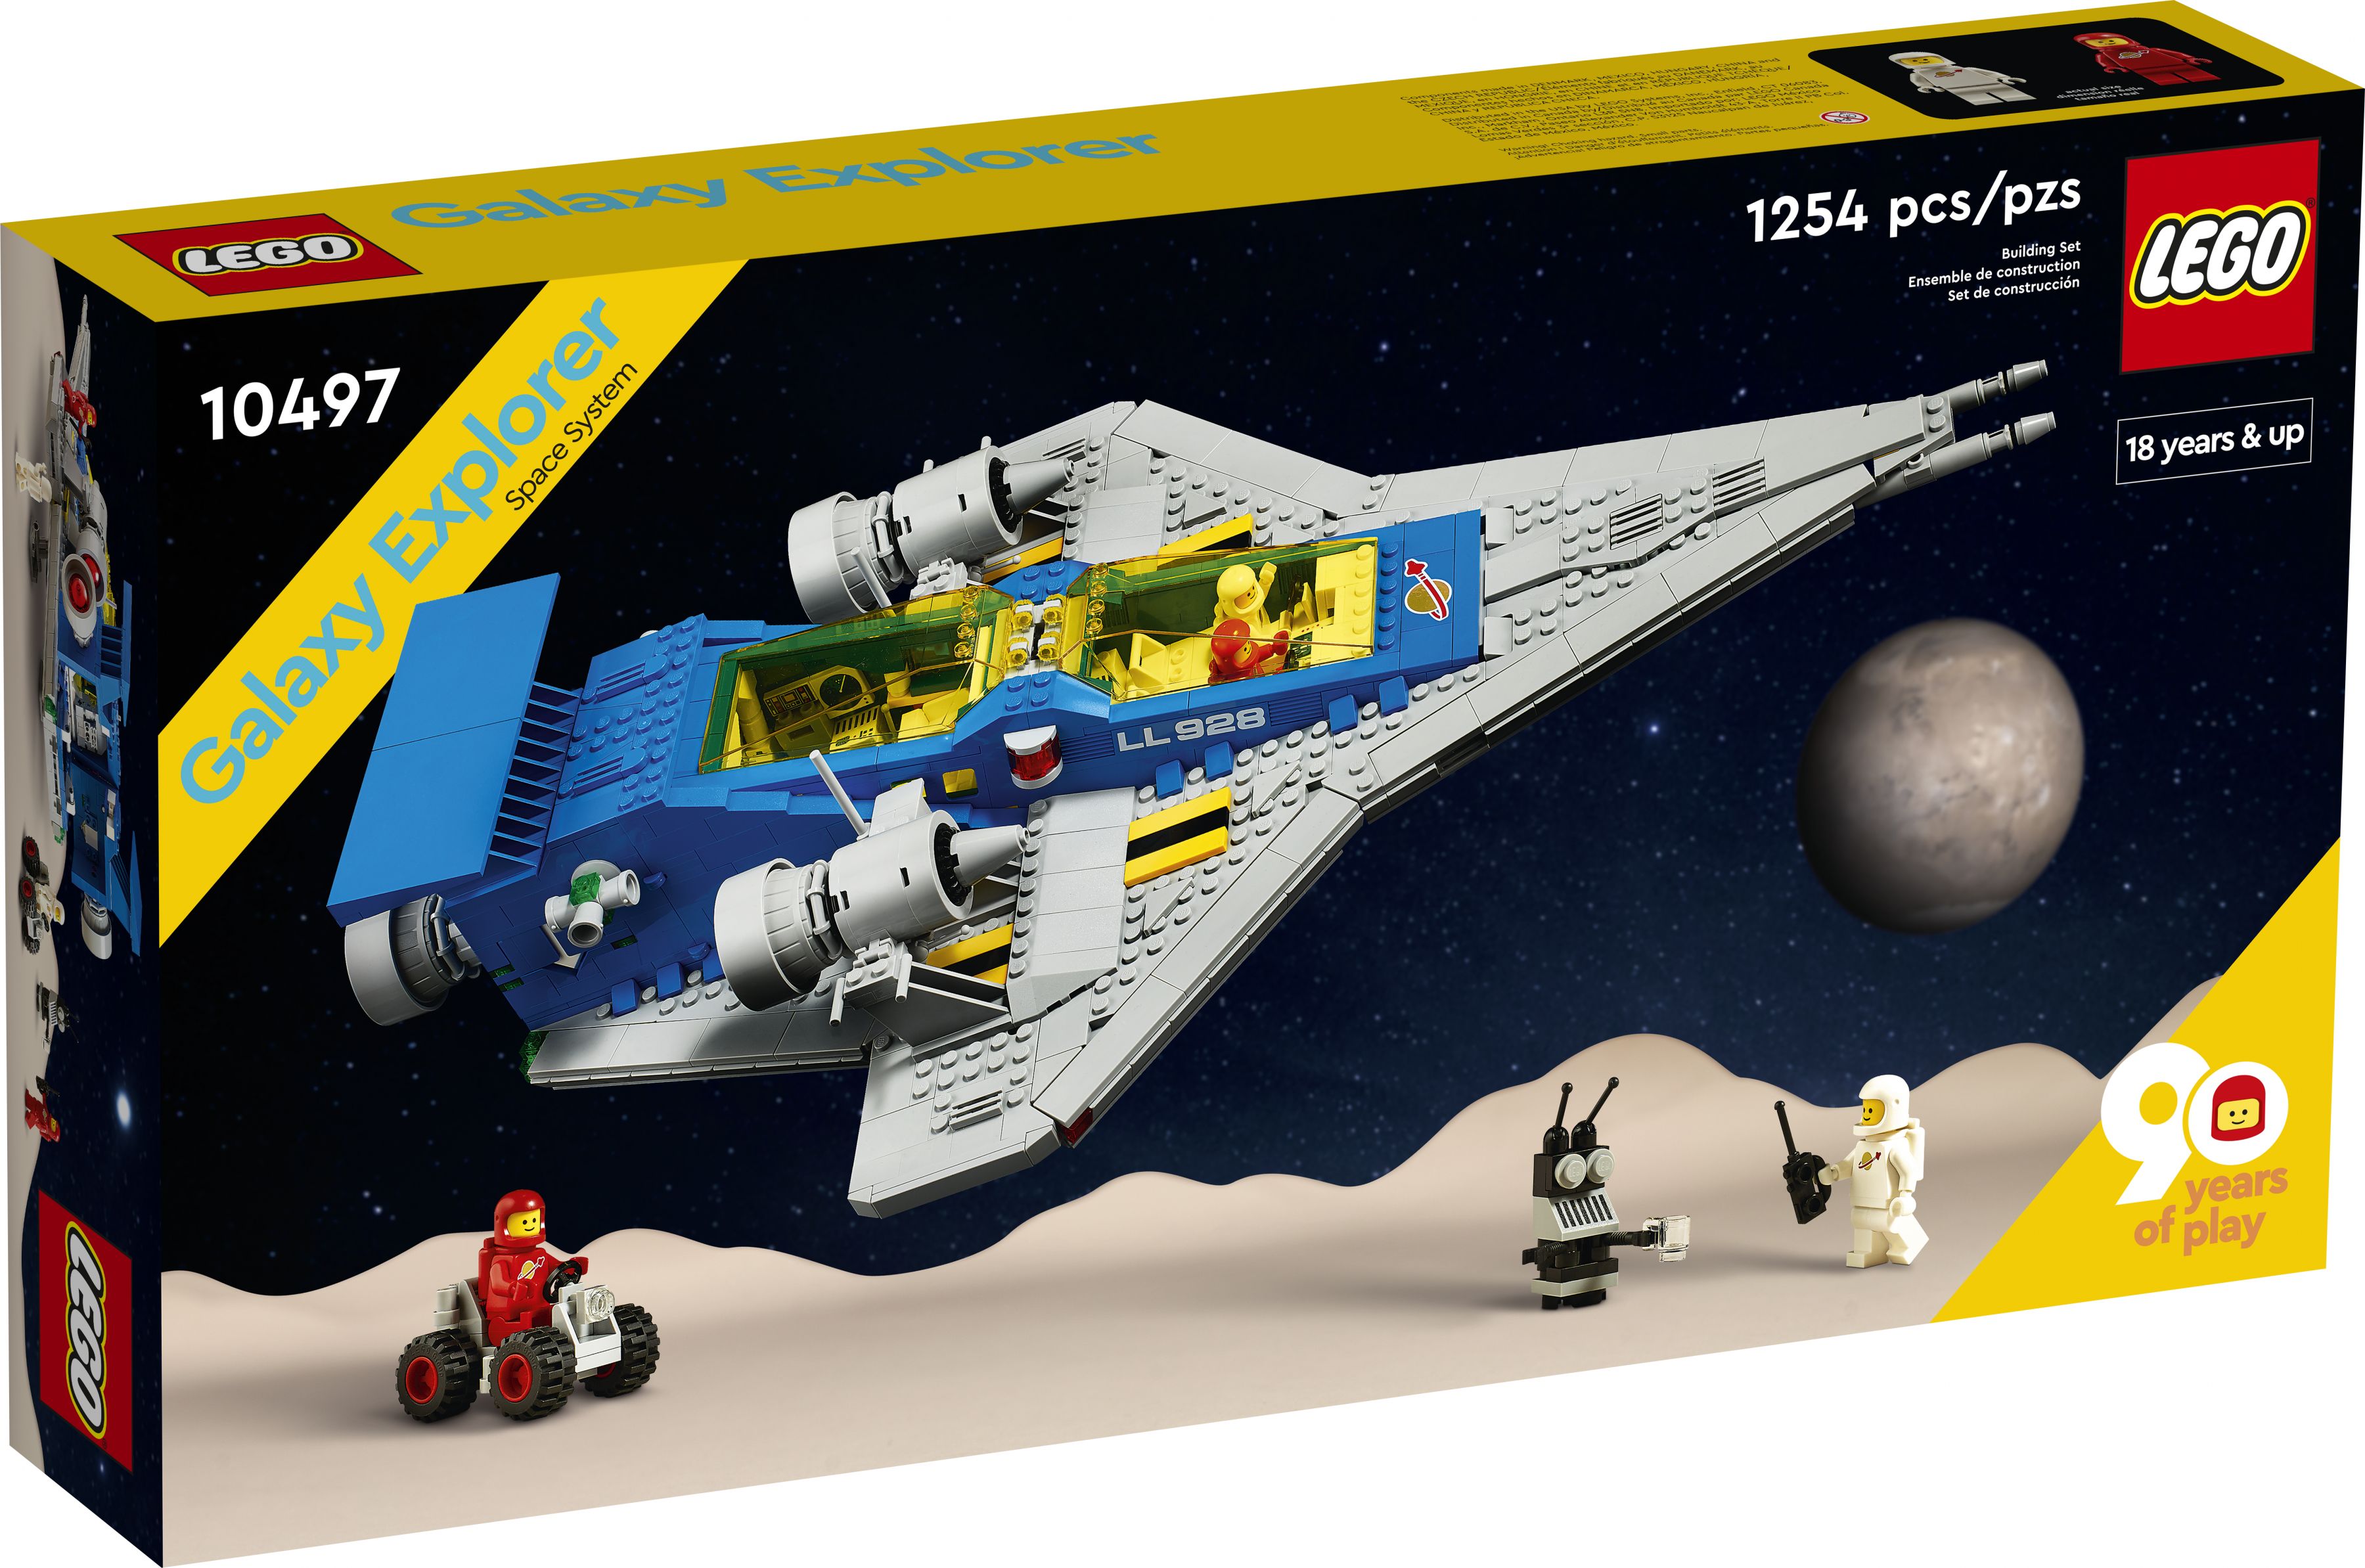 LEGO Advanced Models 10497 Galaxy Explorer LEGO_10497_Box1_v39.jpg